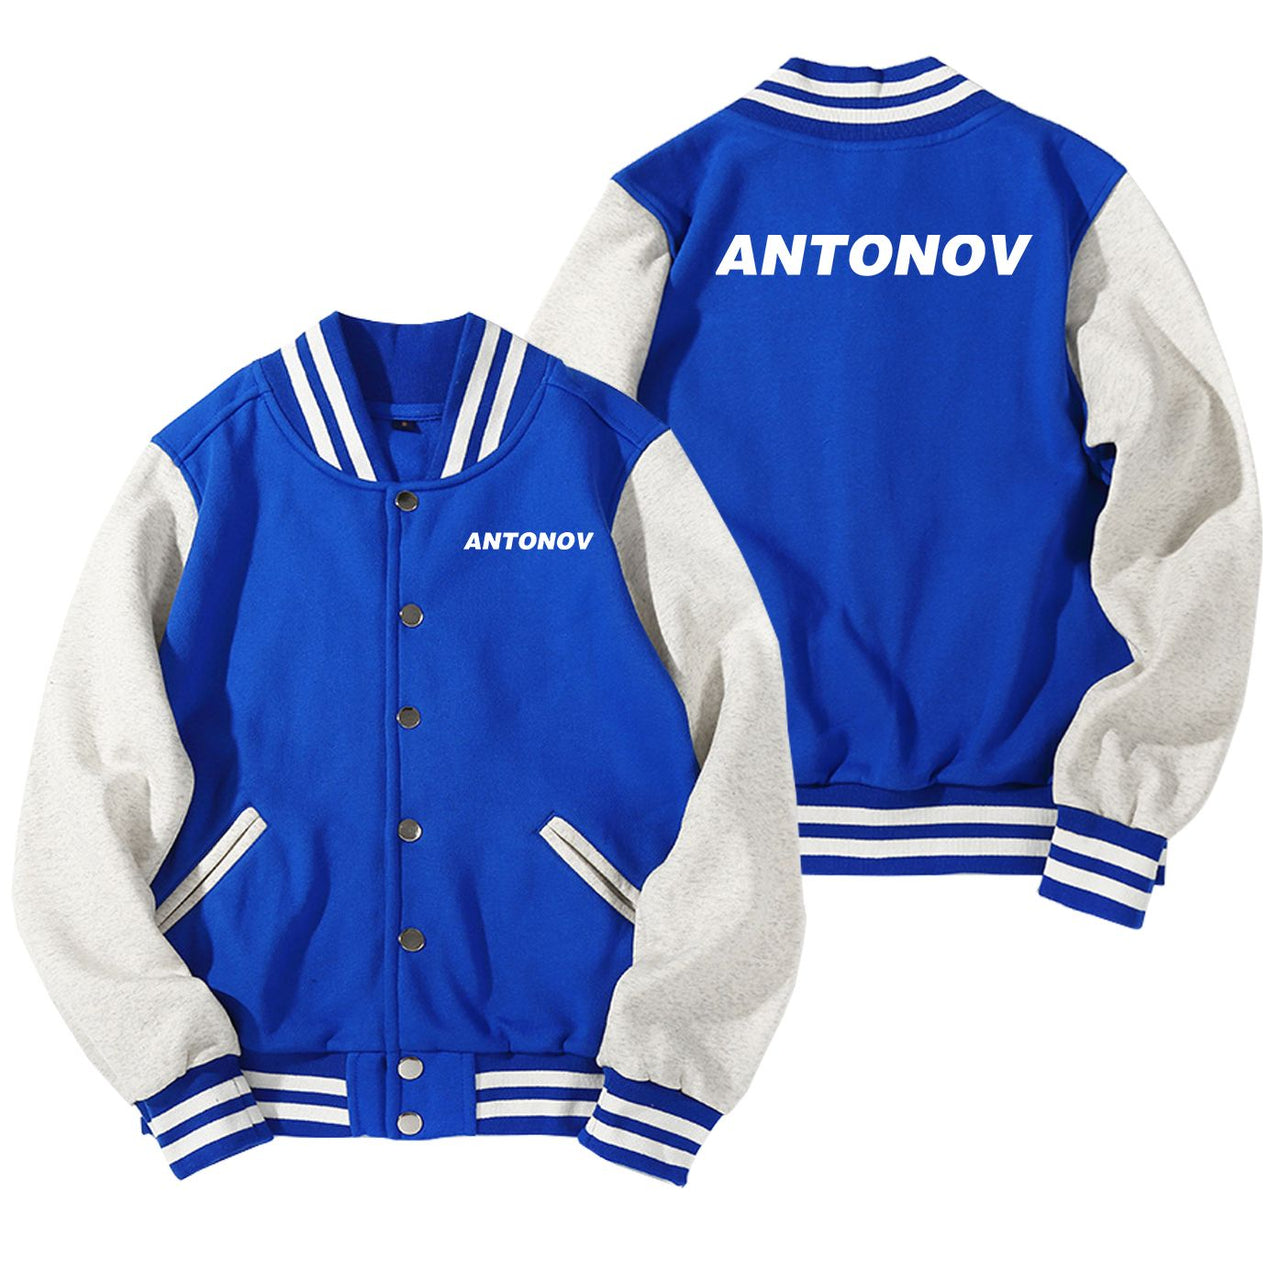 Antonov & Text Designed Baseball Style Jackets